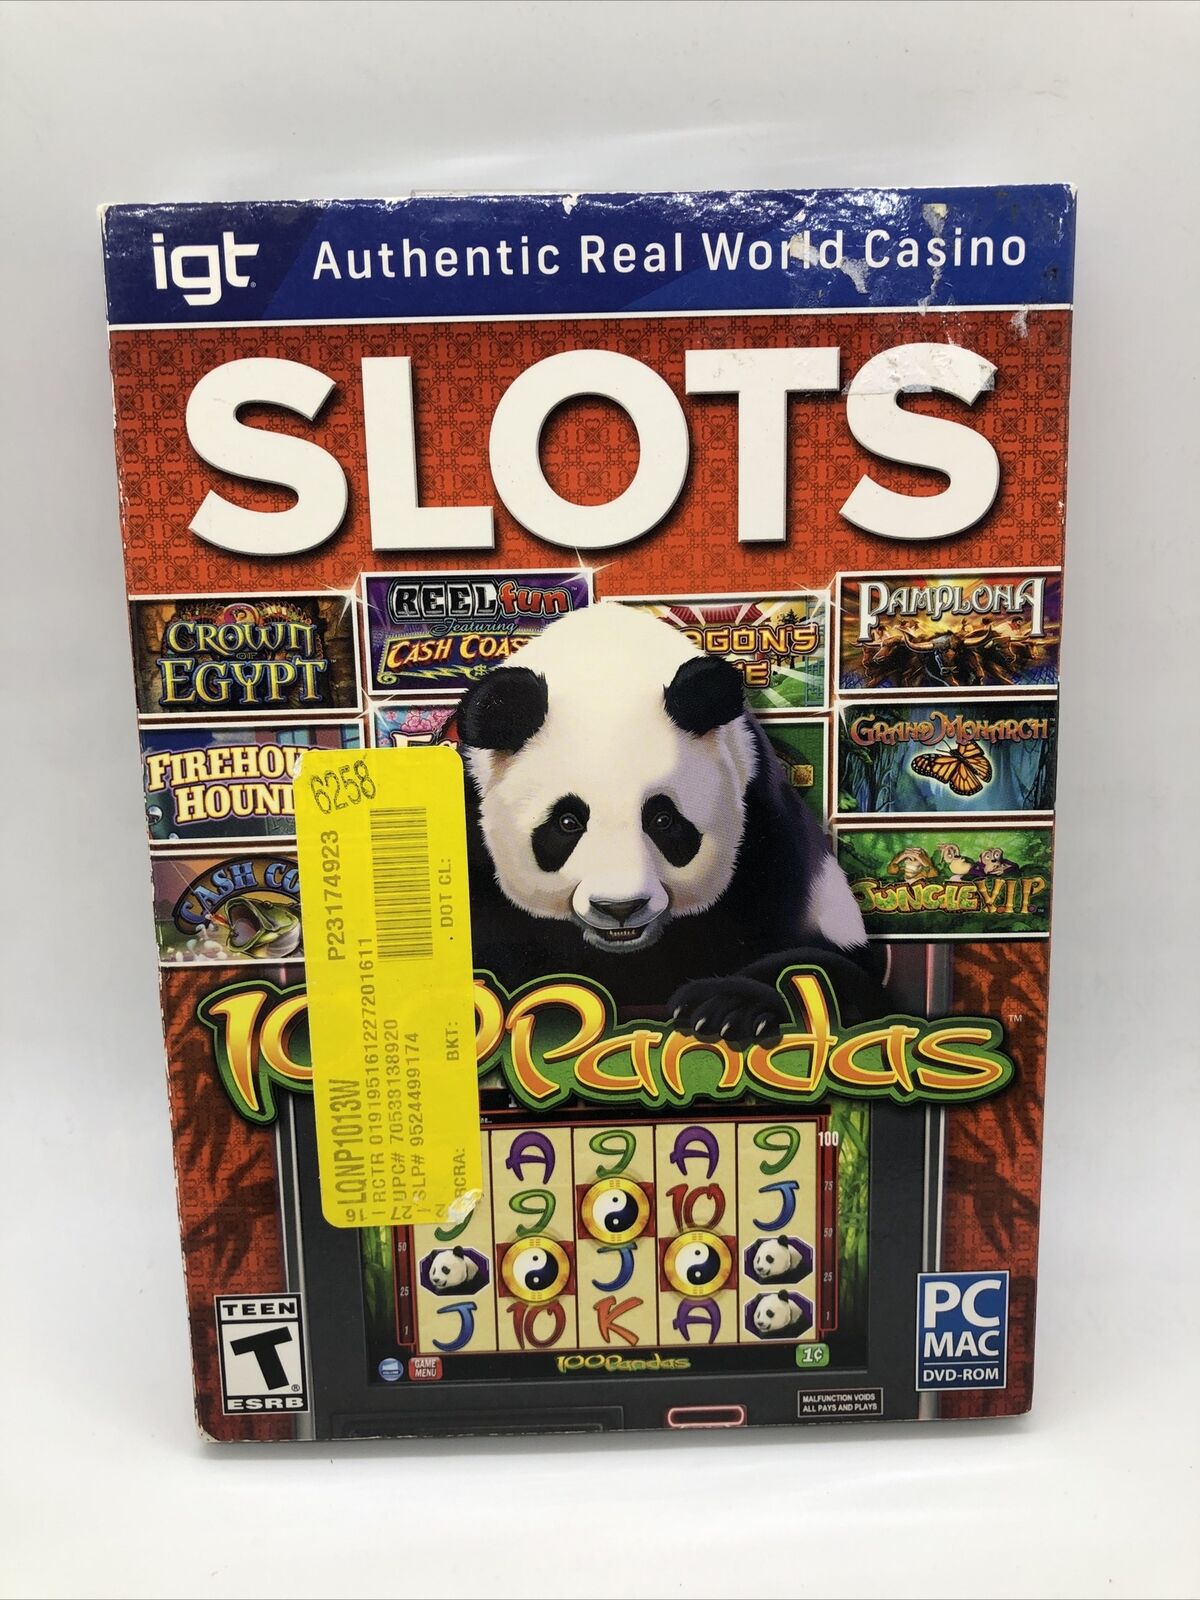 igt 100 Pandas Slots PC - Real World Casino - SEALED